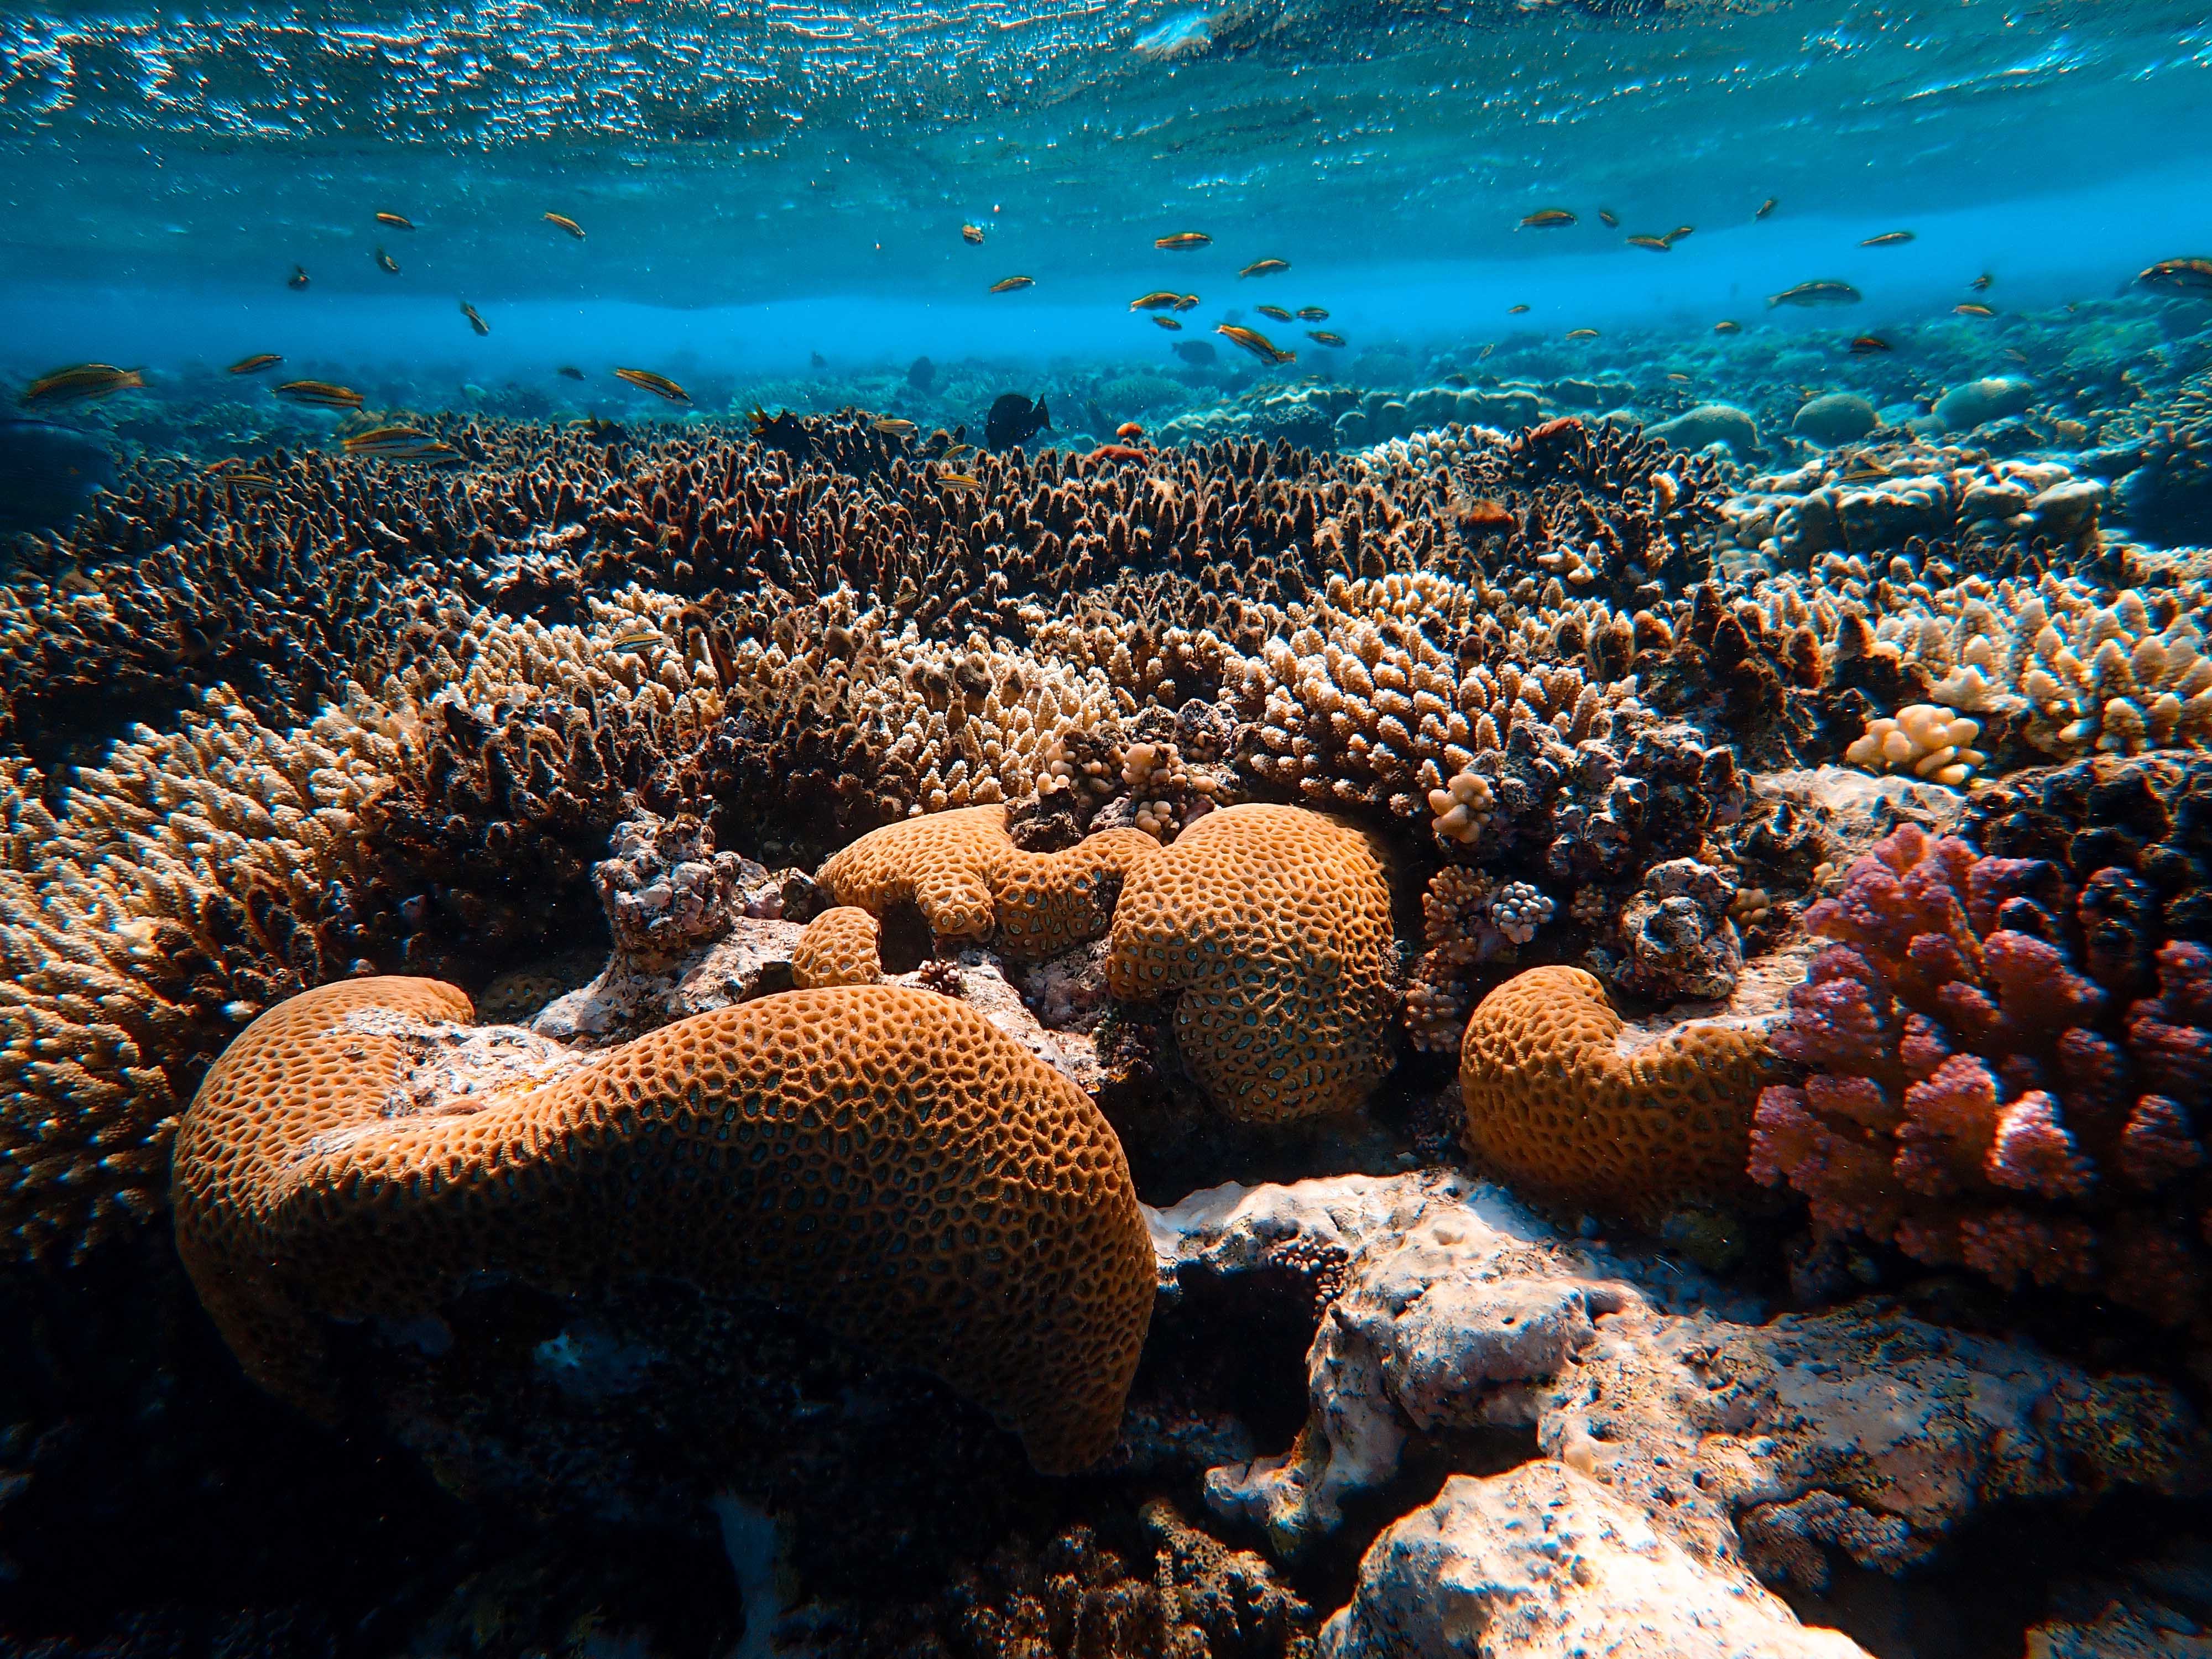 88430 descargar imagen naturaleza, agua, coral, mundo submarino, algas marinas, algas: fondos de pantalla y protectores de pantalla gratis